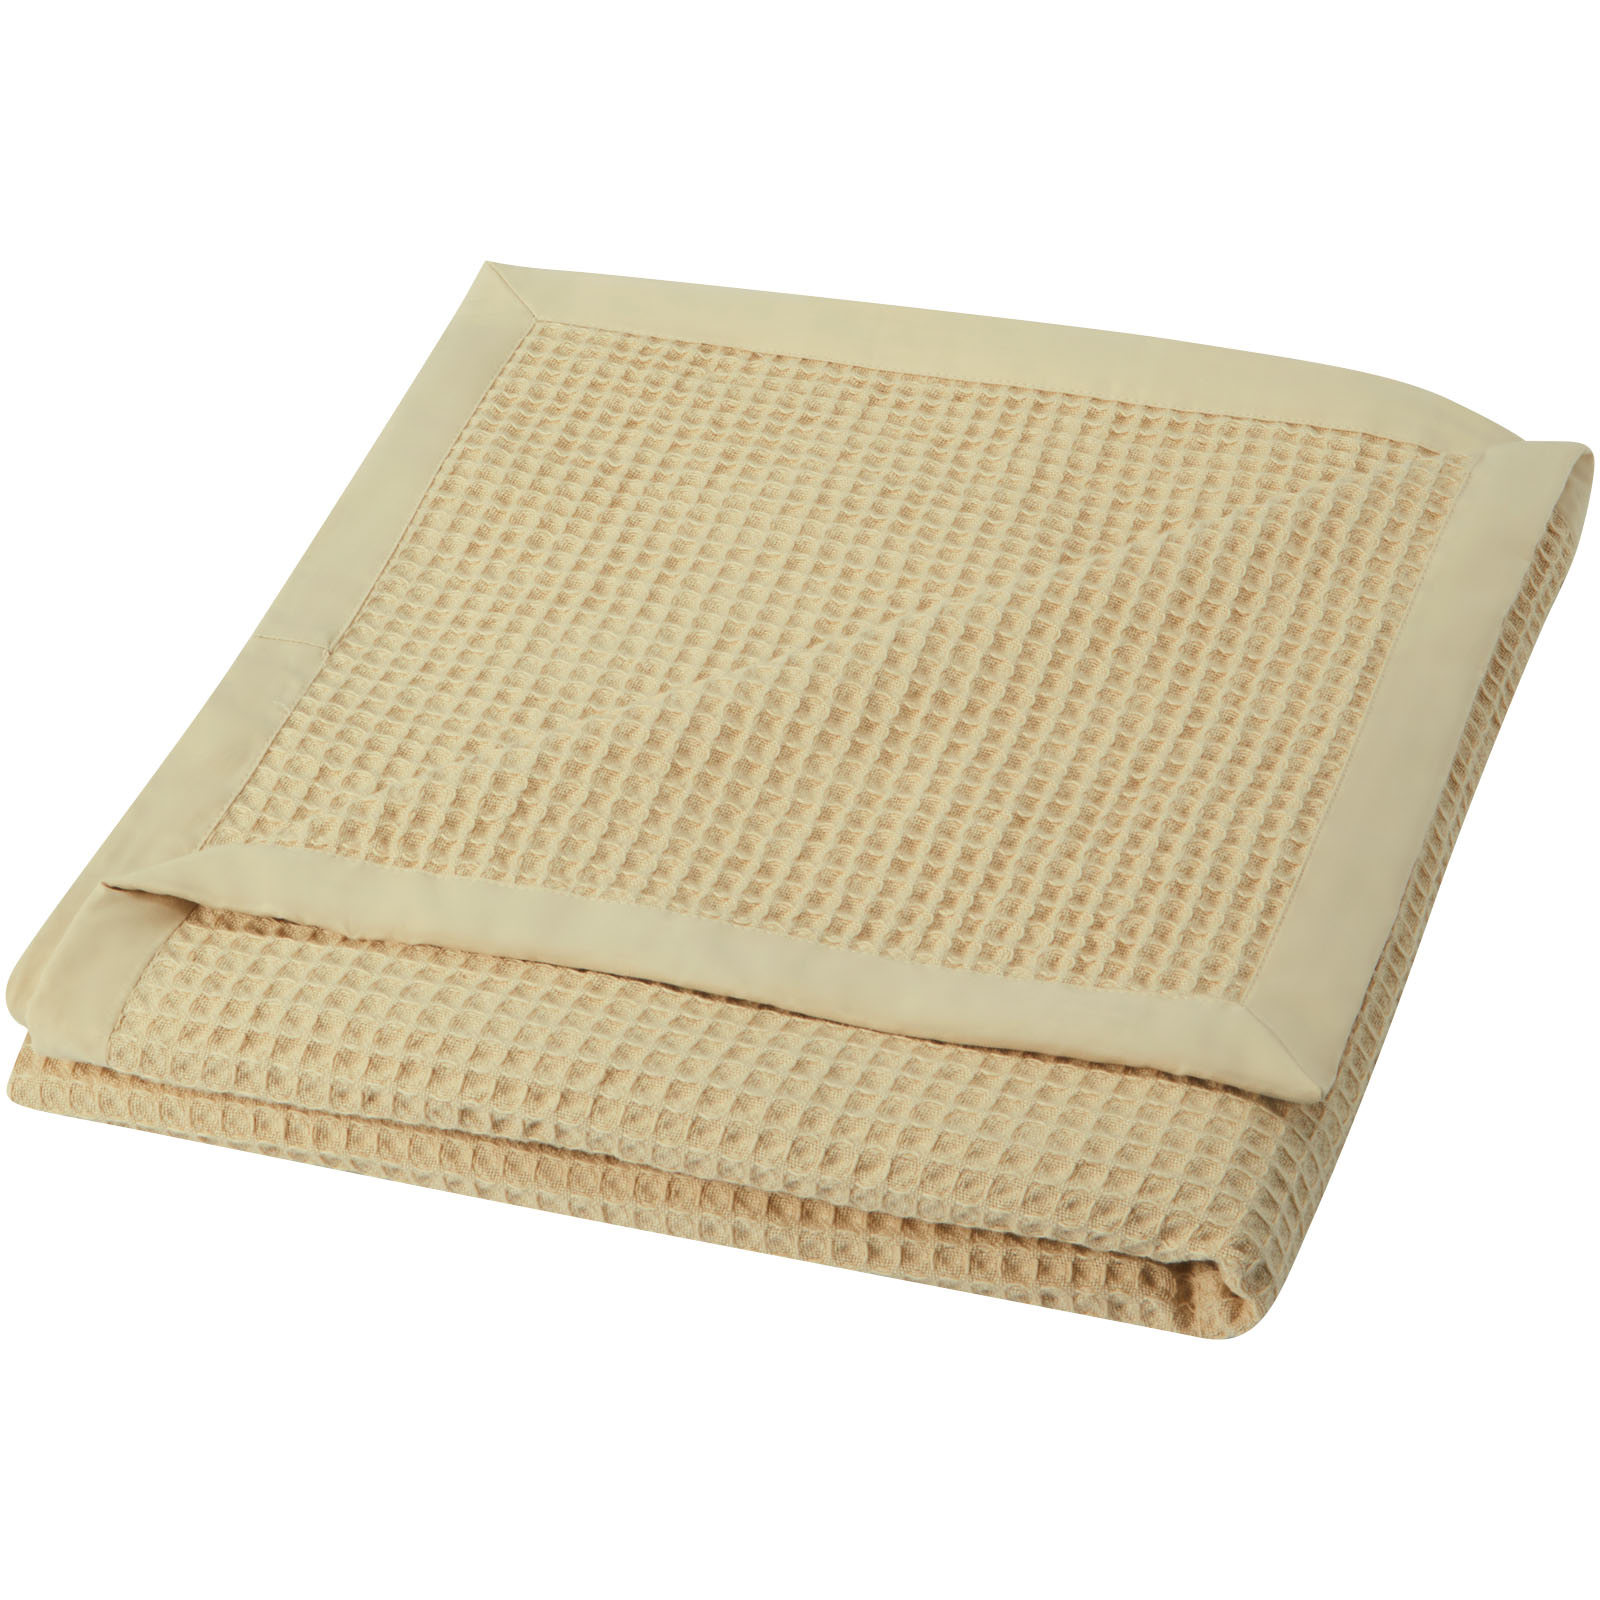 Advertising Blankets - Abele 150 x 140 cm cotton waffle blanket - 0